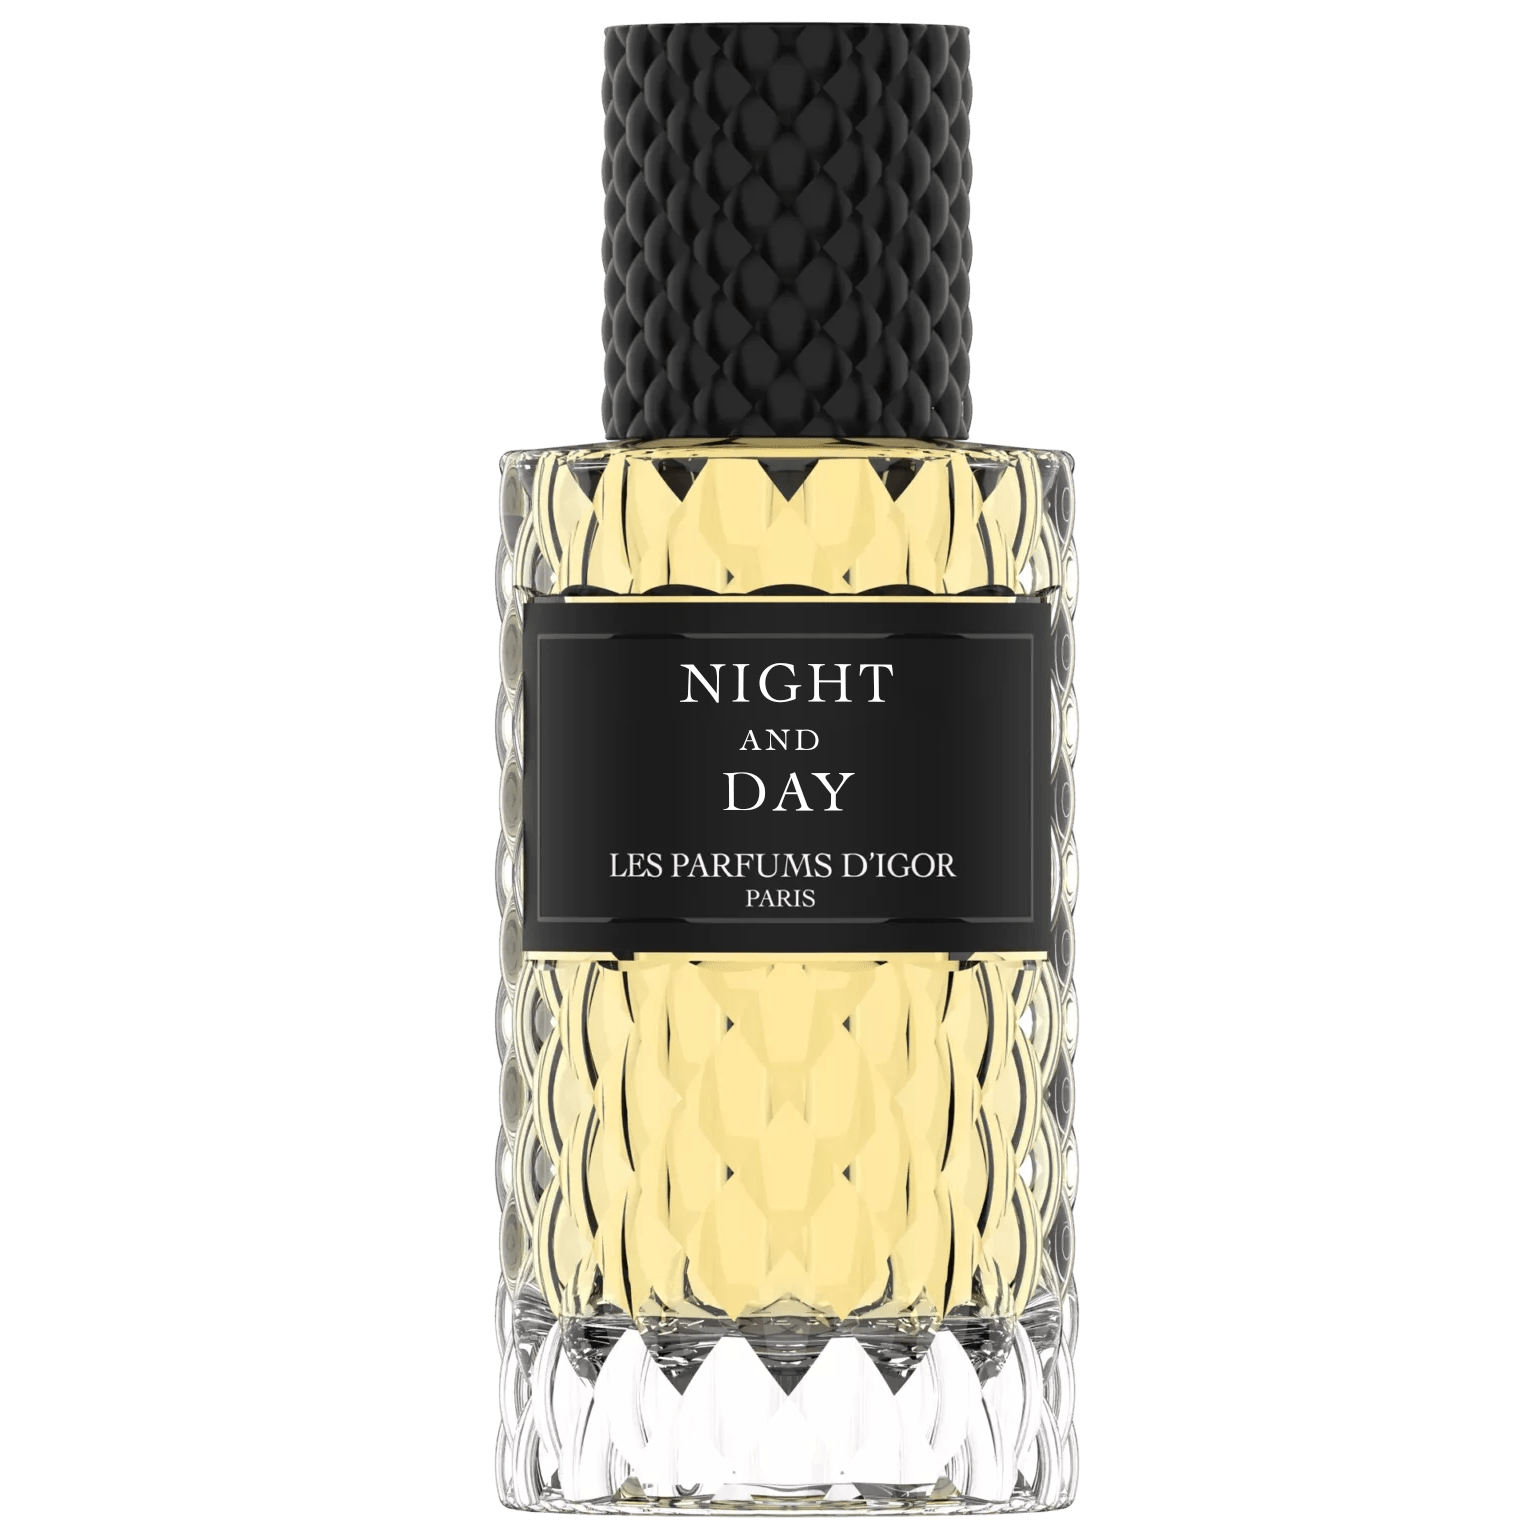 Night and day - Les parfums d'Igor